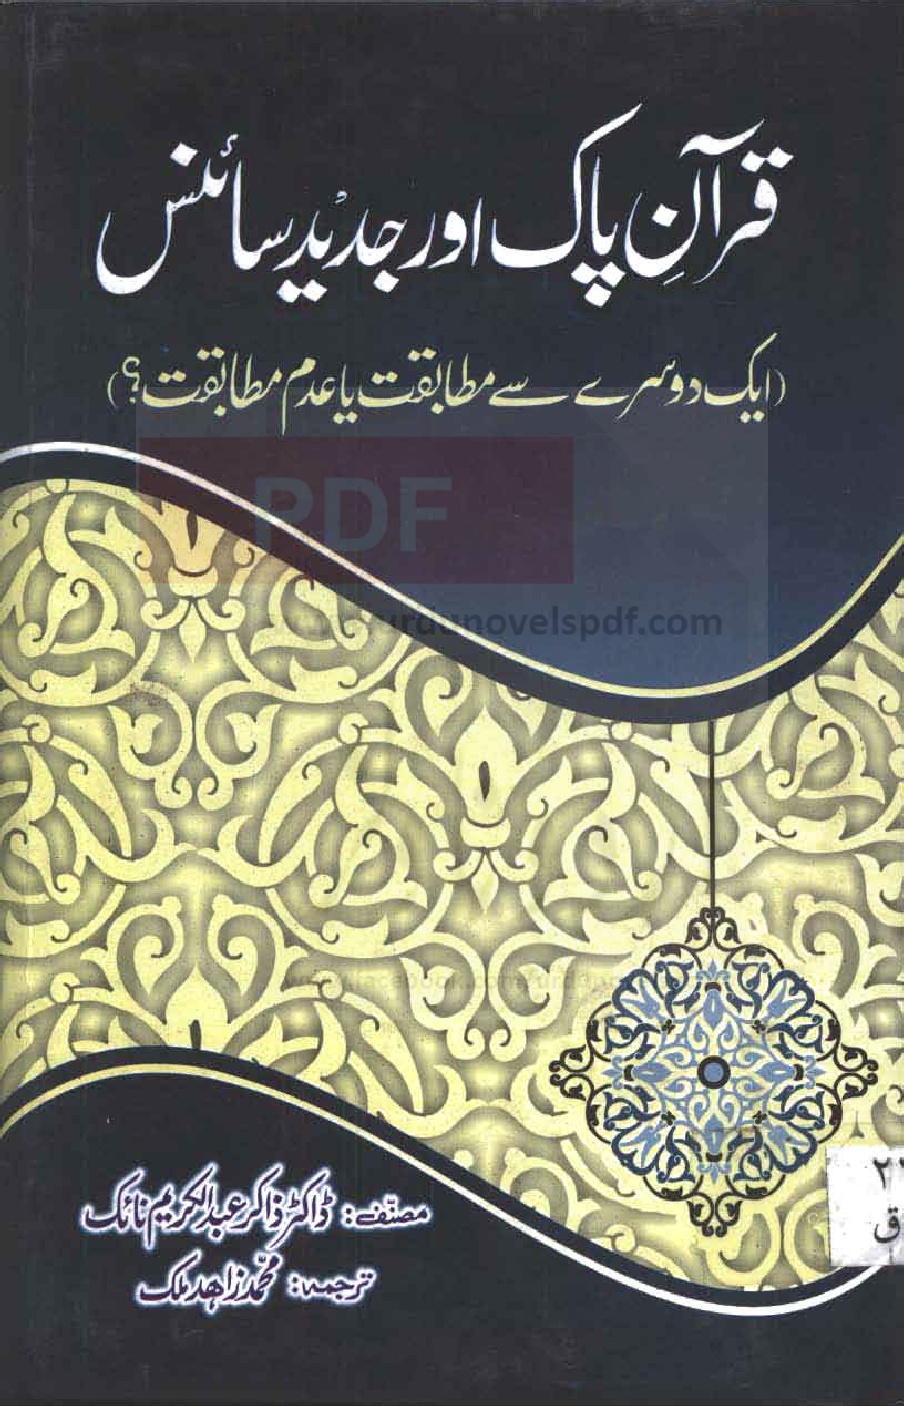 Quran-e-Pak Aur Jadeed Science by Dr. Zakir Naik